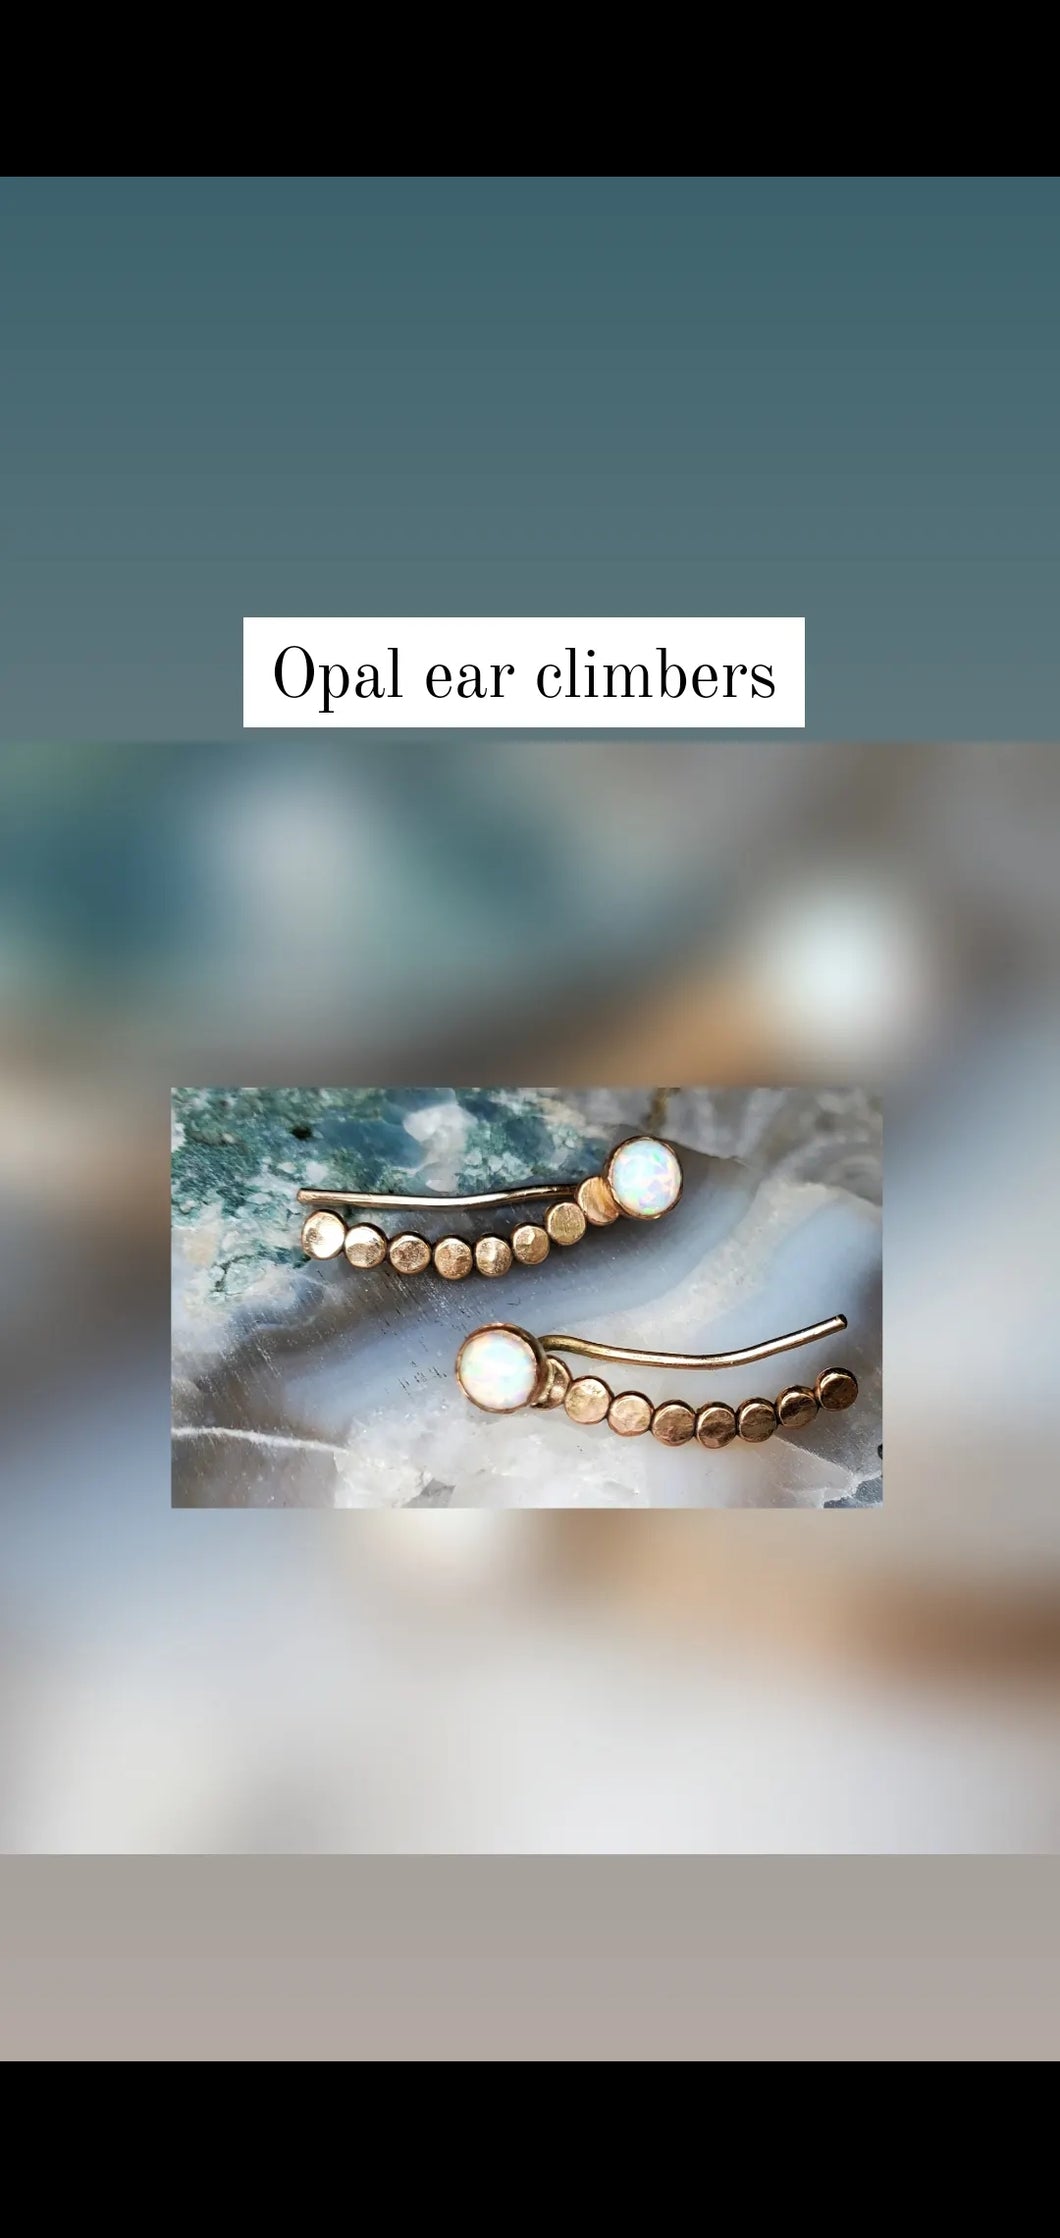 Opal ear climbers